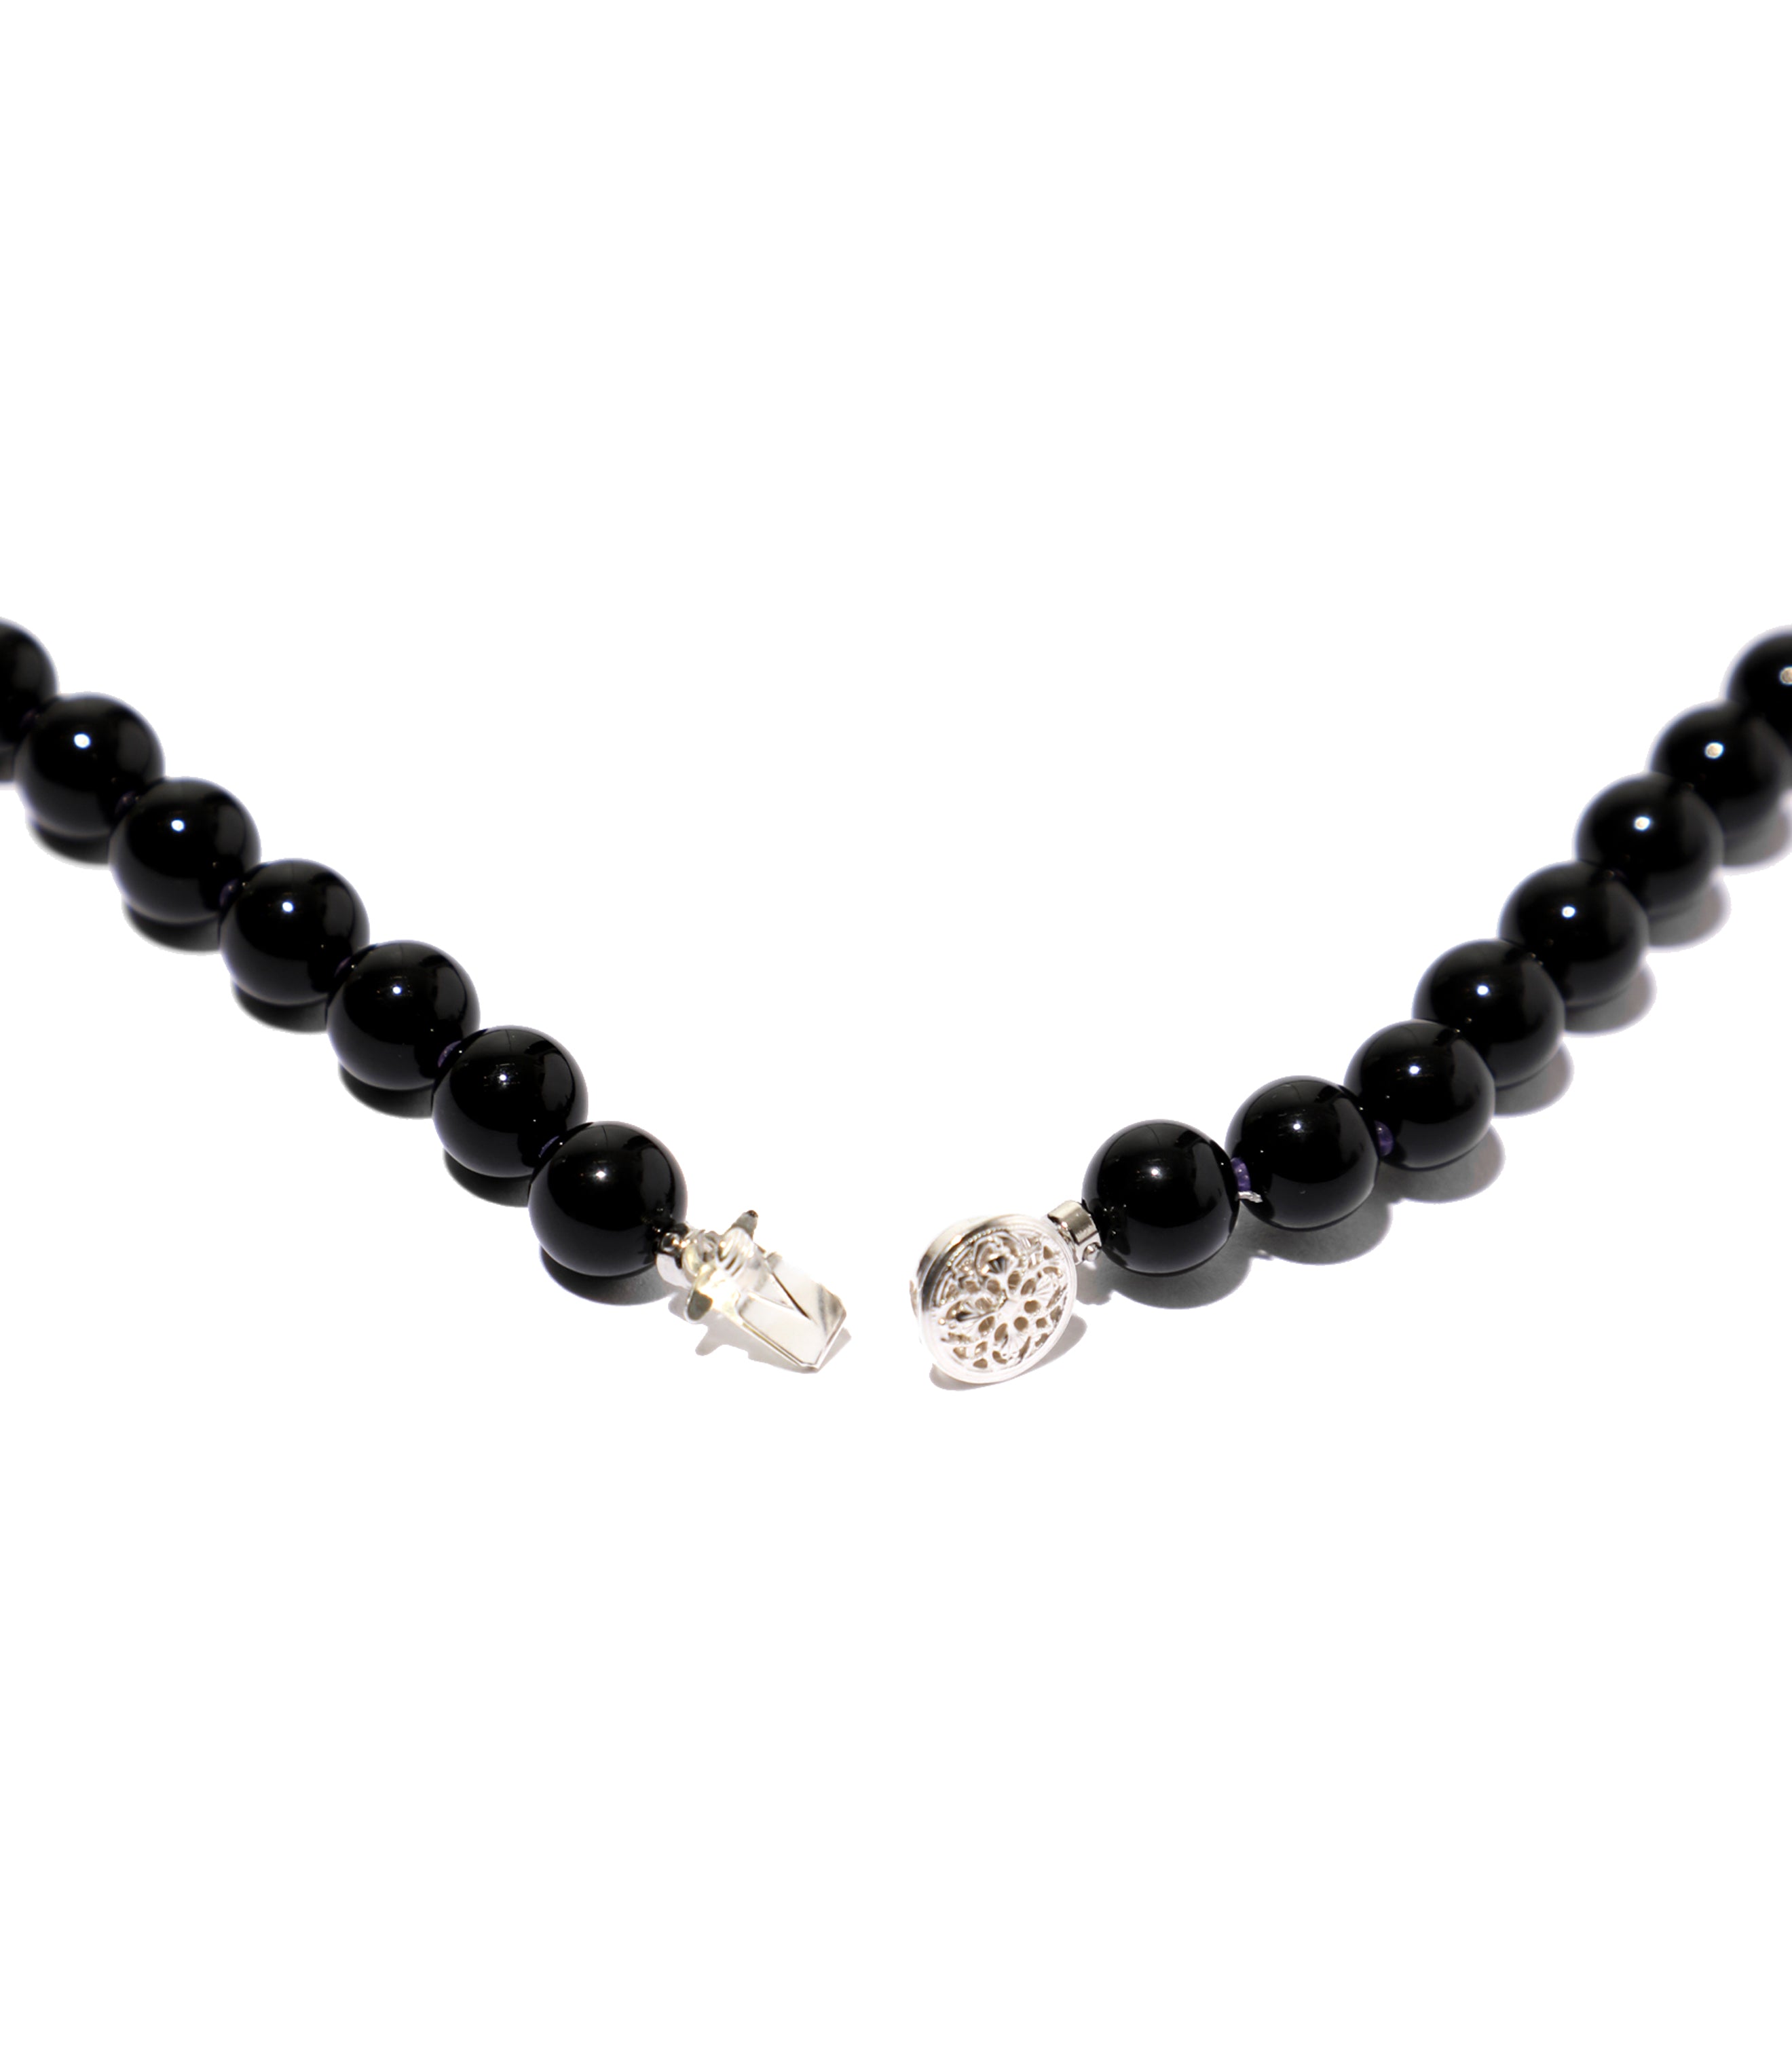 Necklace - Black Onyx